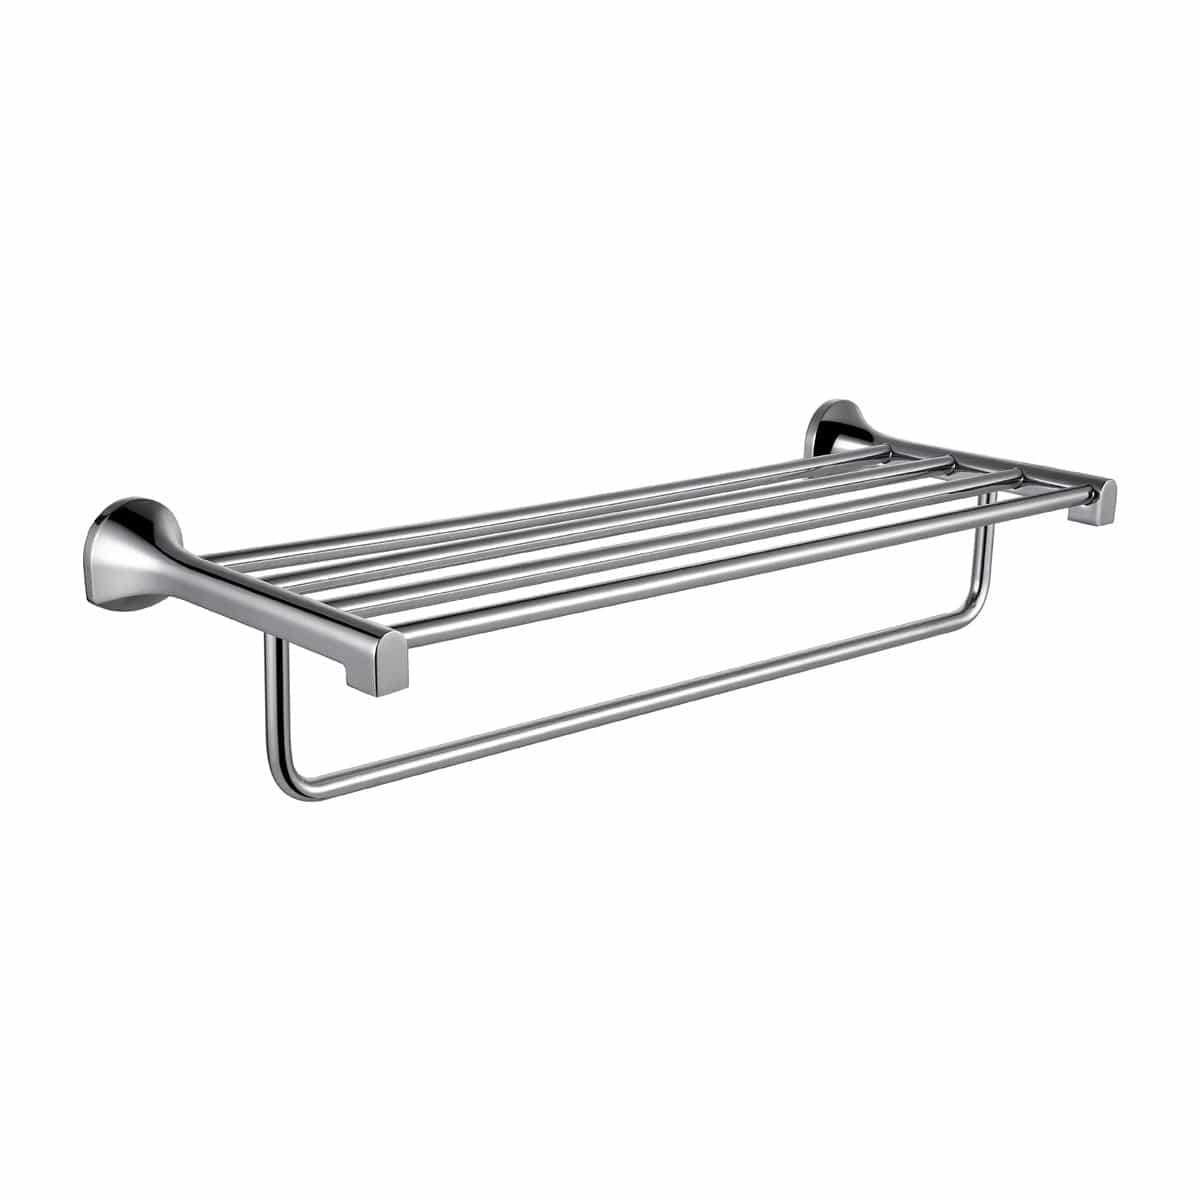 Modern Stainless Steel Four Bar Towel Rack - Model 9322 | Supply Master Ghana Bathroom Accessories Buy Tools hardware Building materials